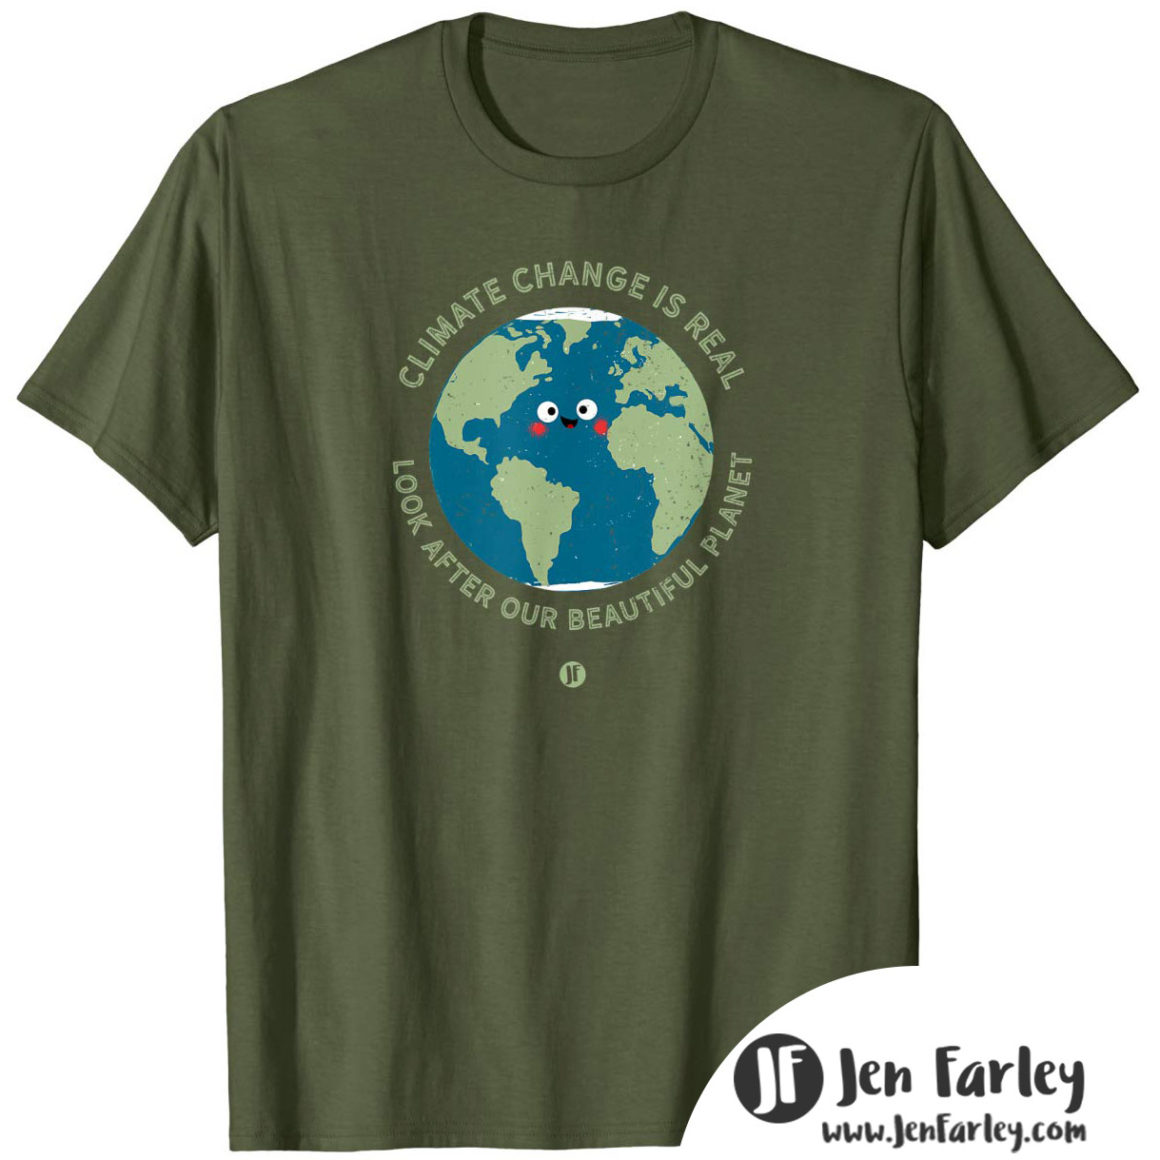 Climate Change Tshirt Green Jennifer Farley